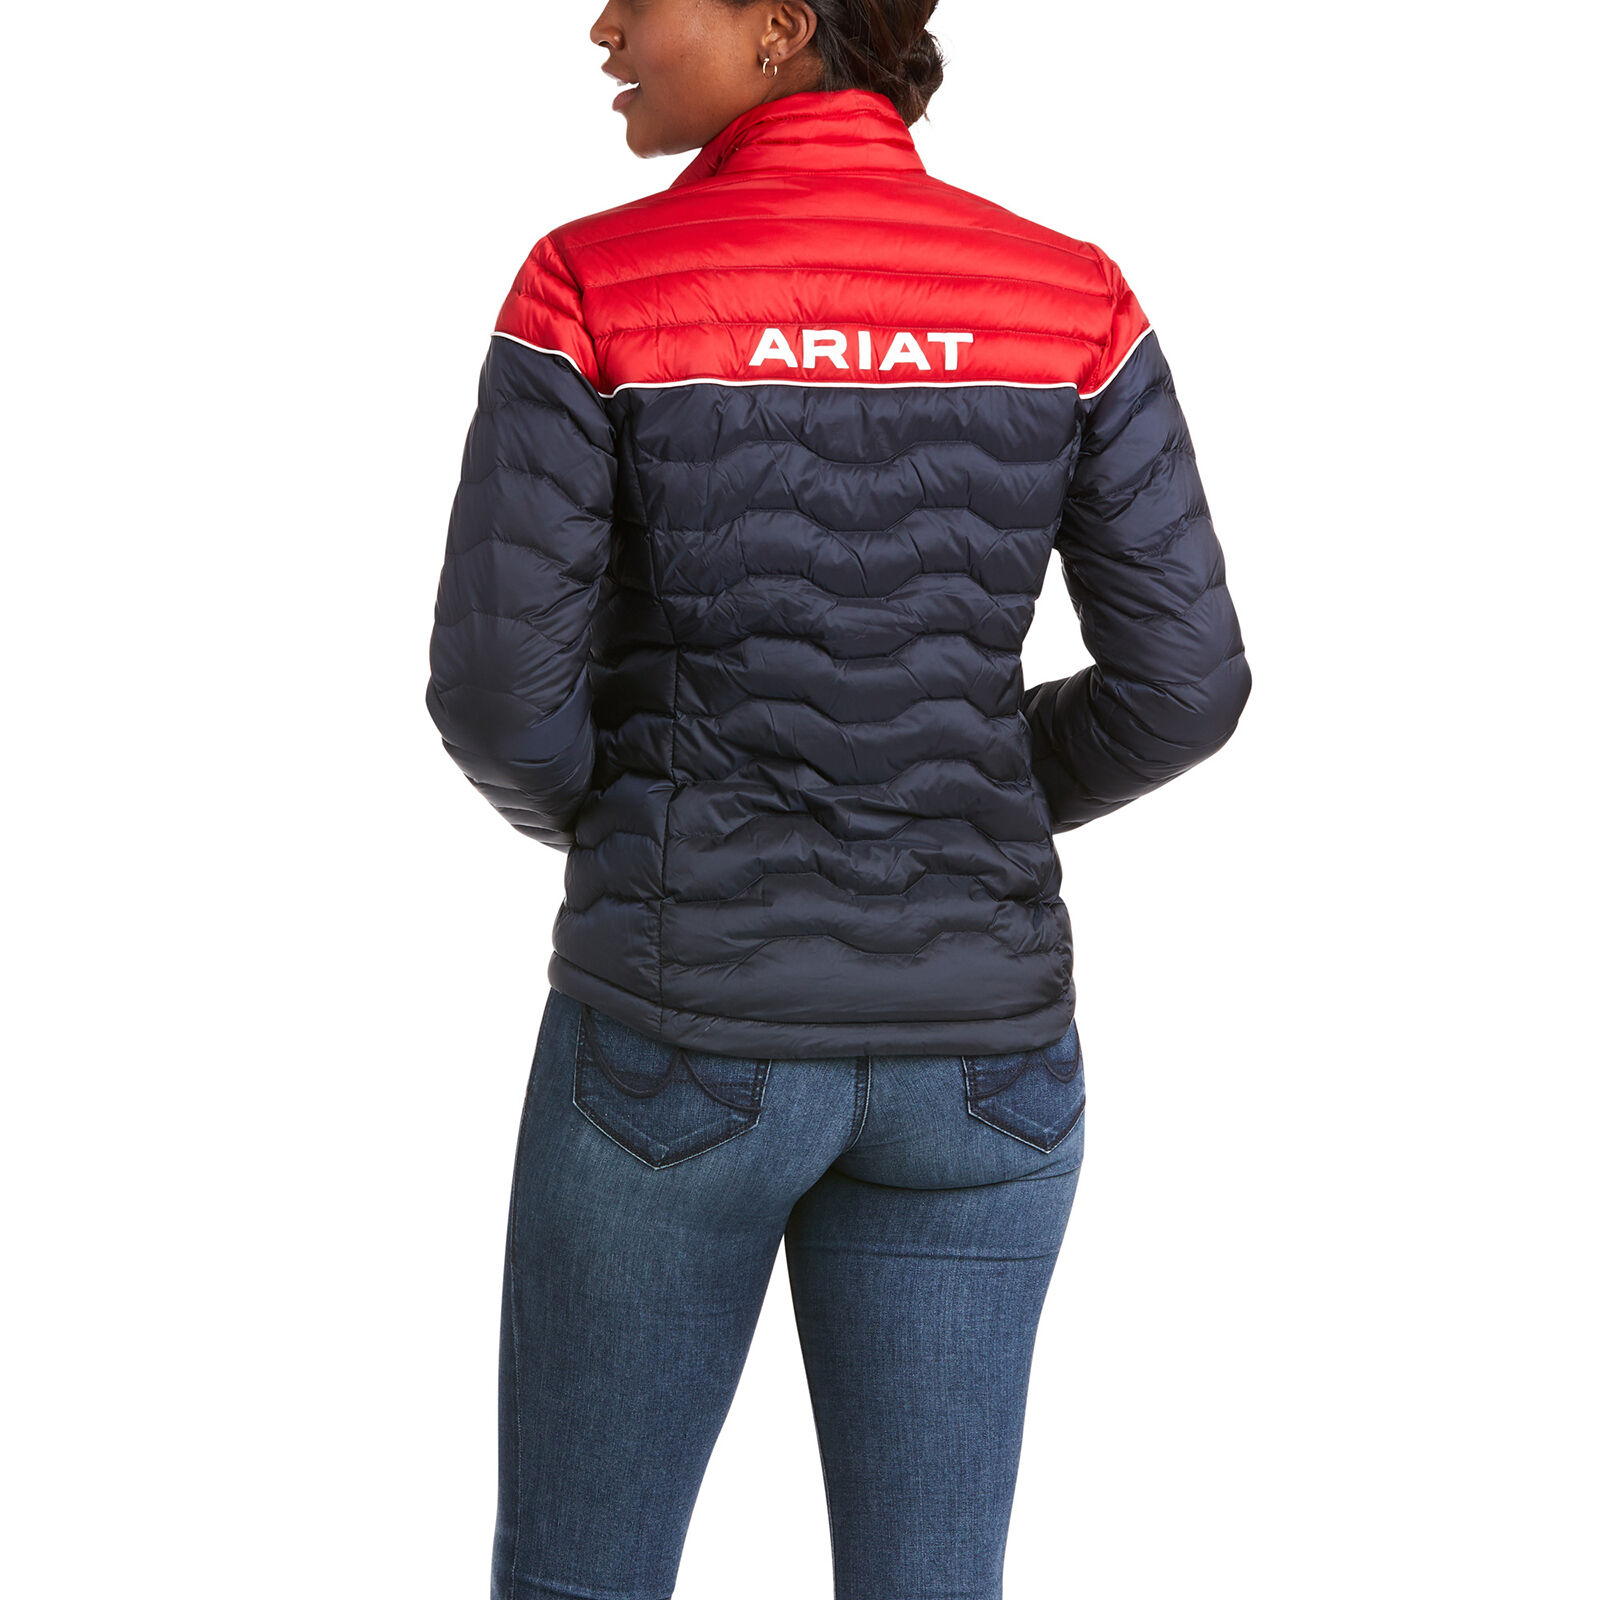 Ariat Ideal 3.0 Women's Down Team Jacket